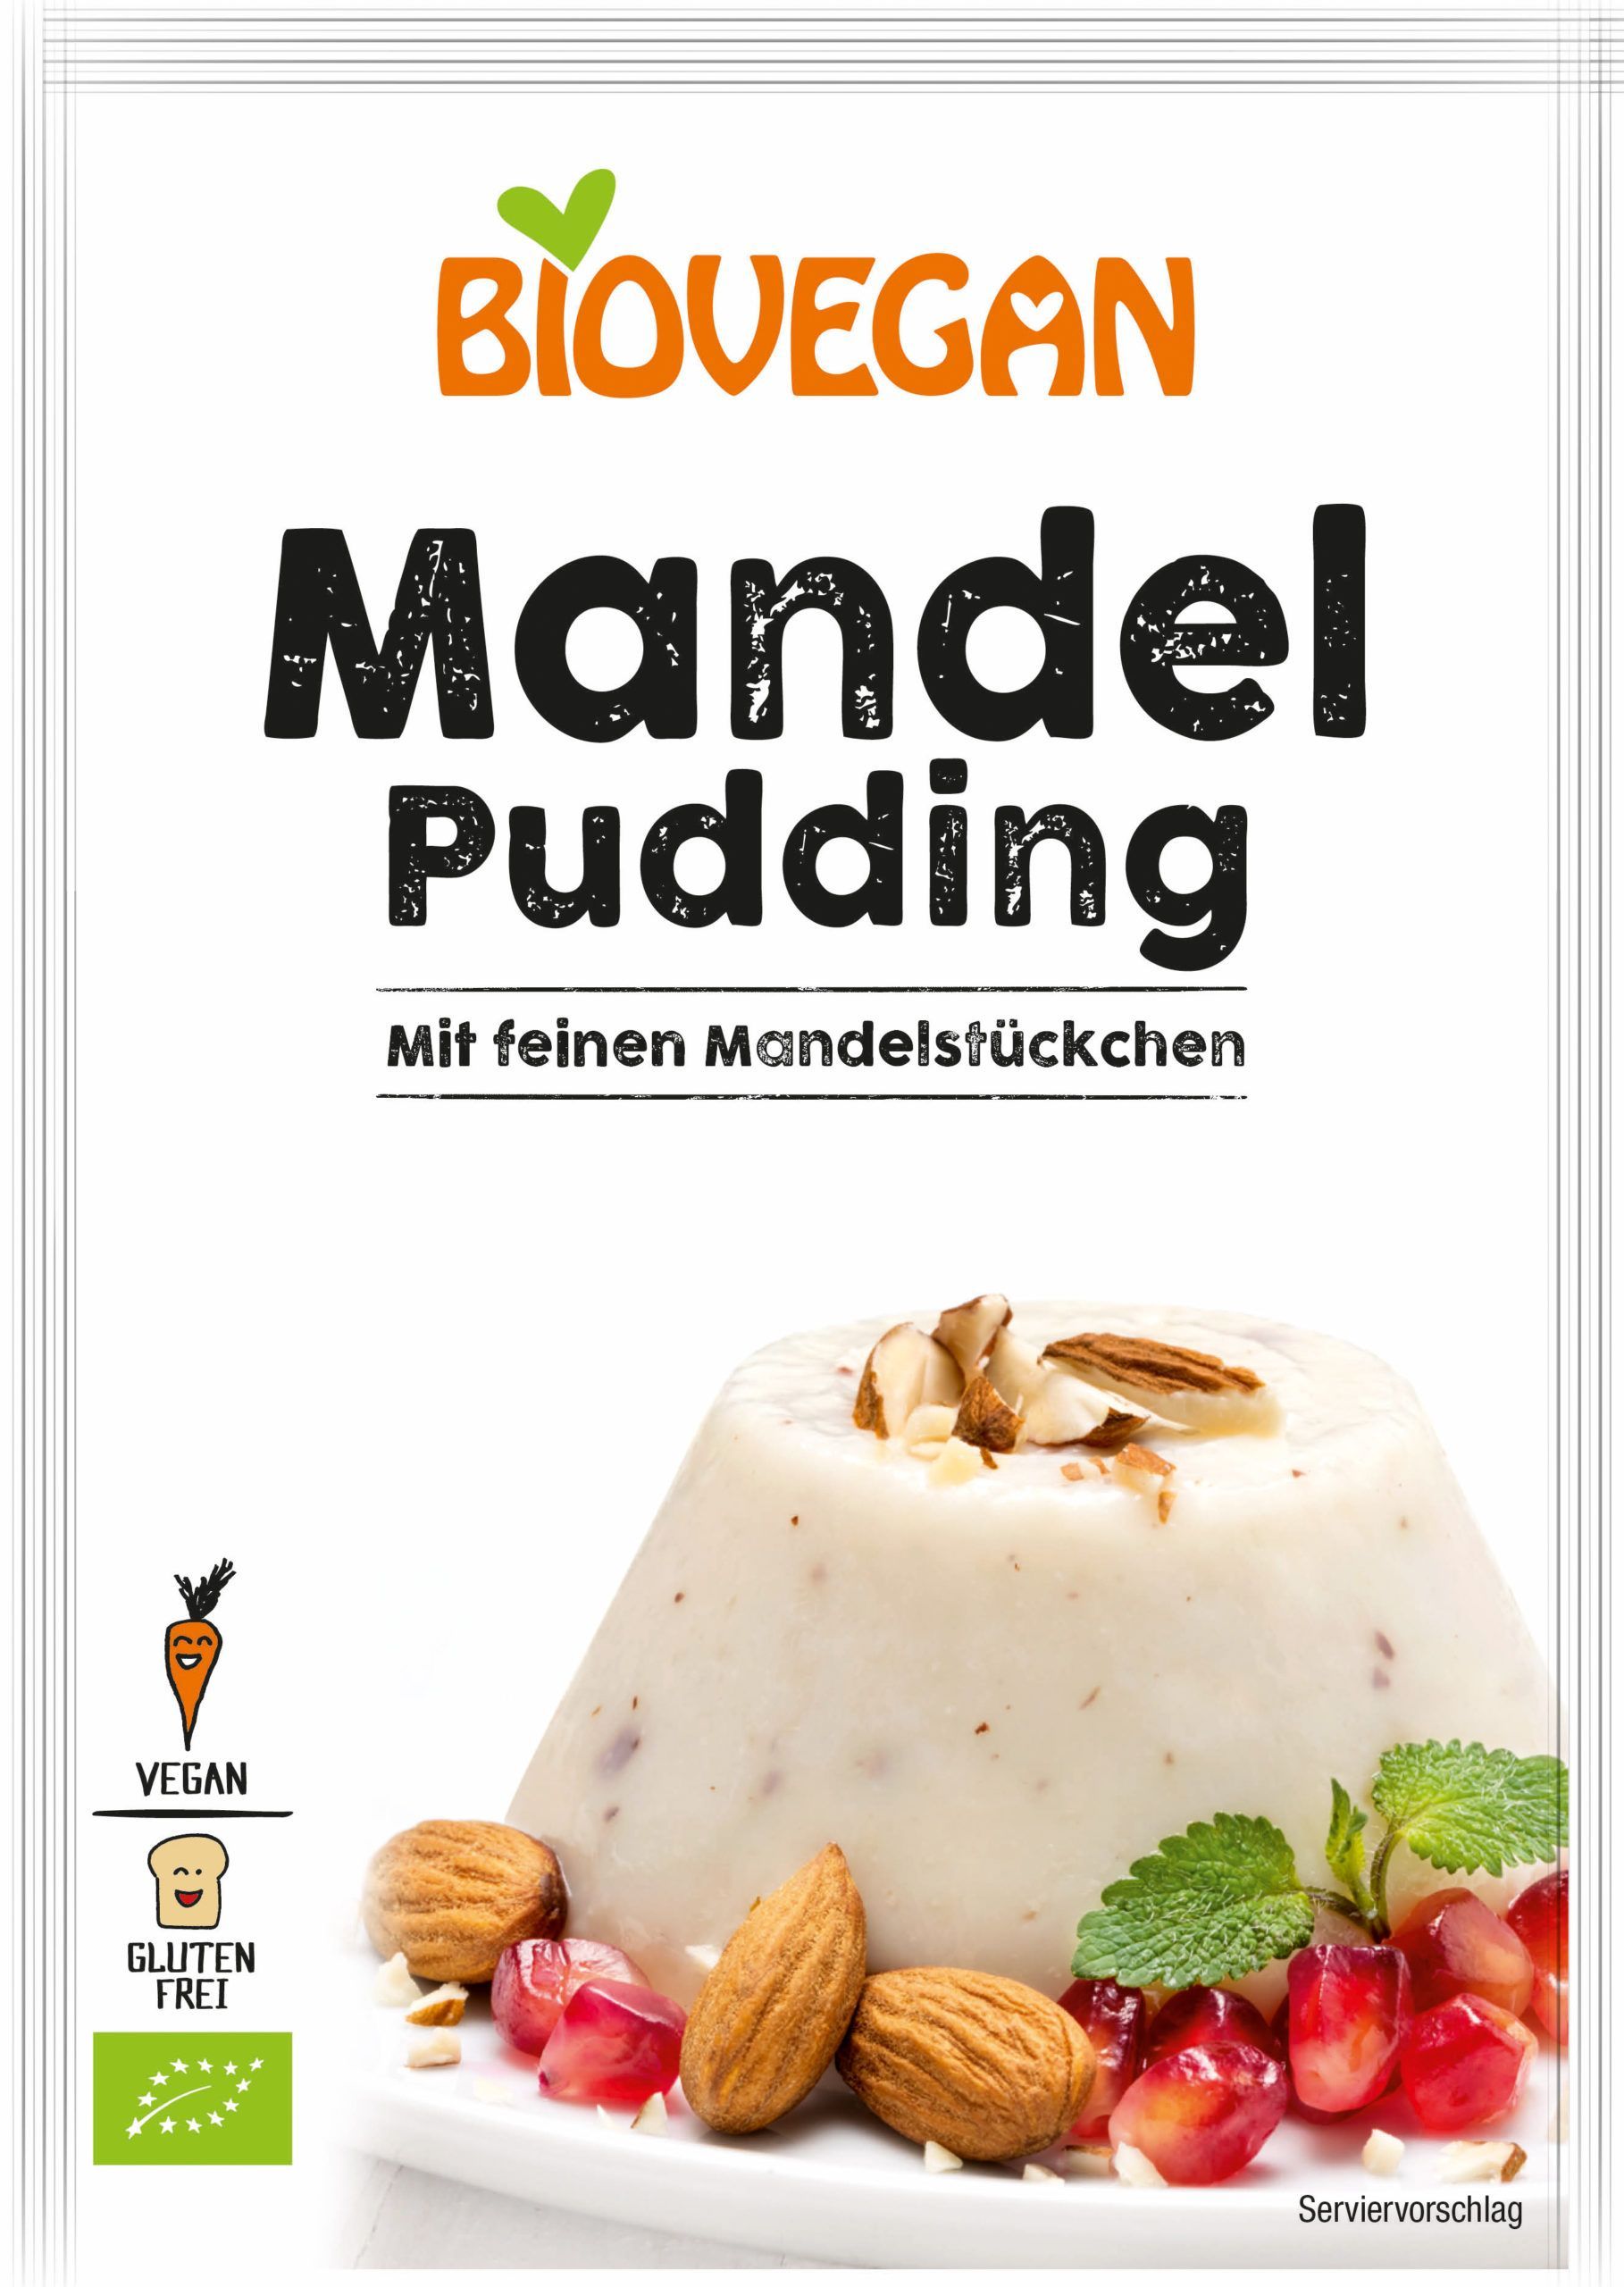 Mandel Pudding Tüte